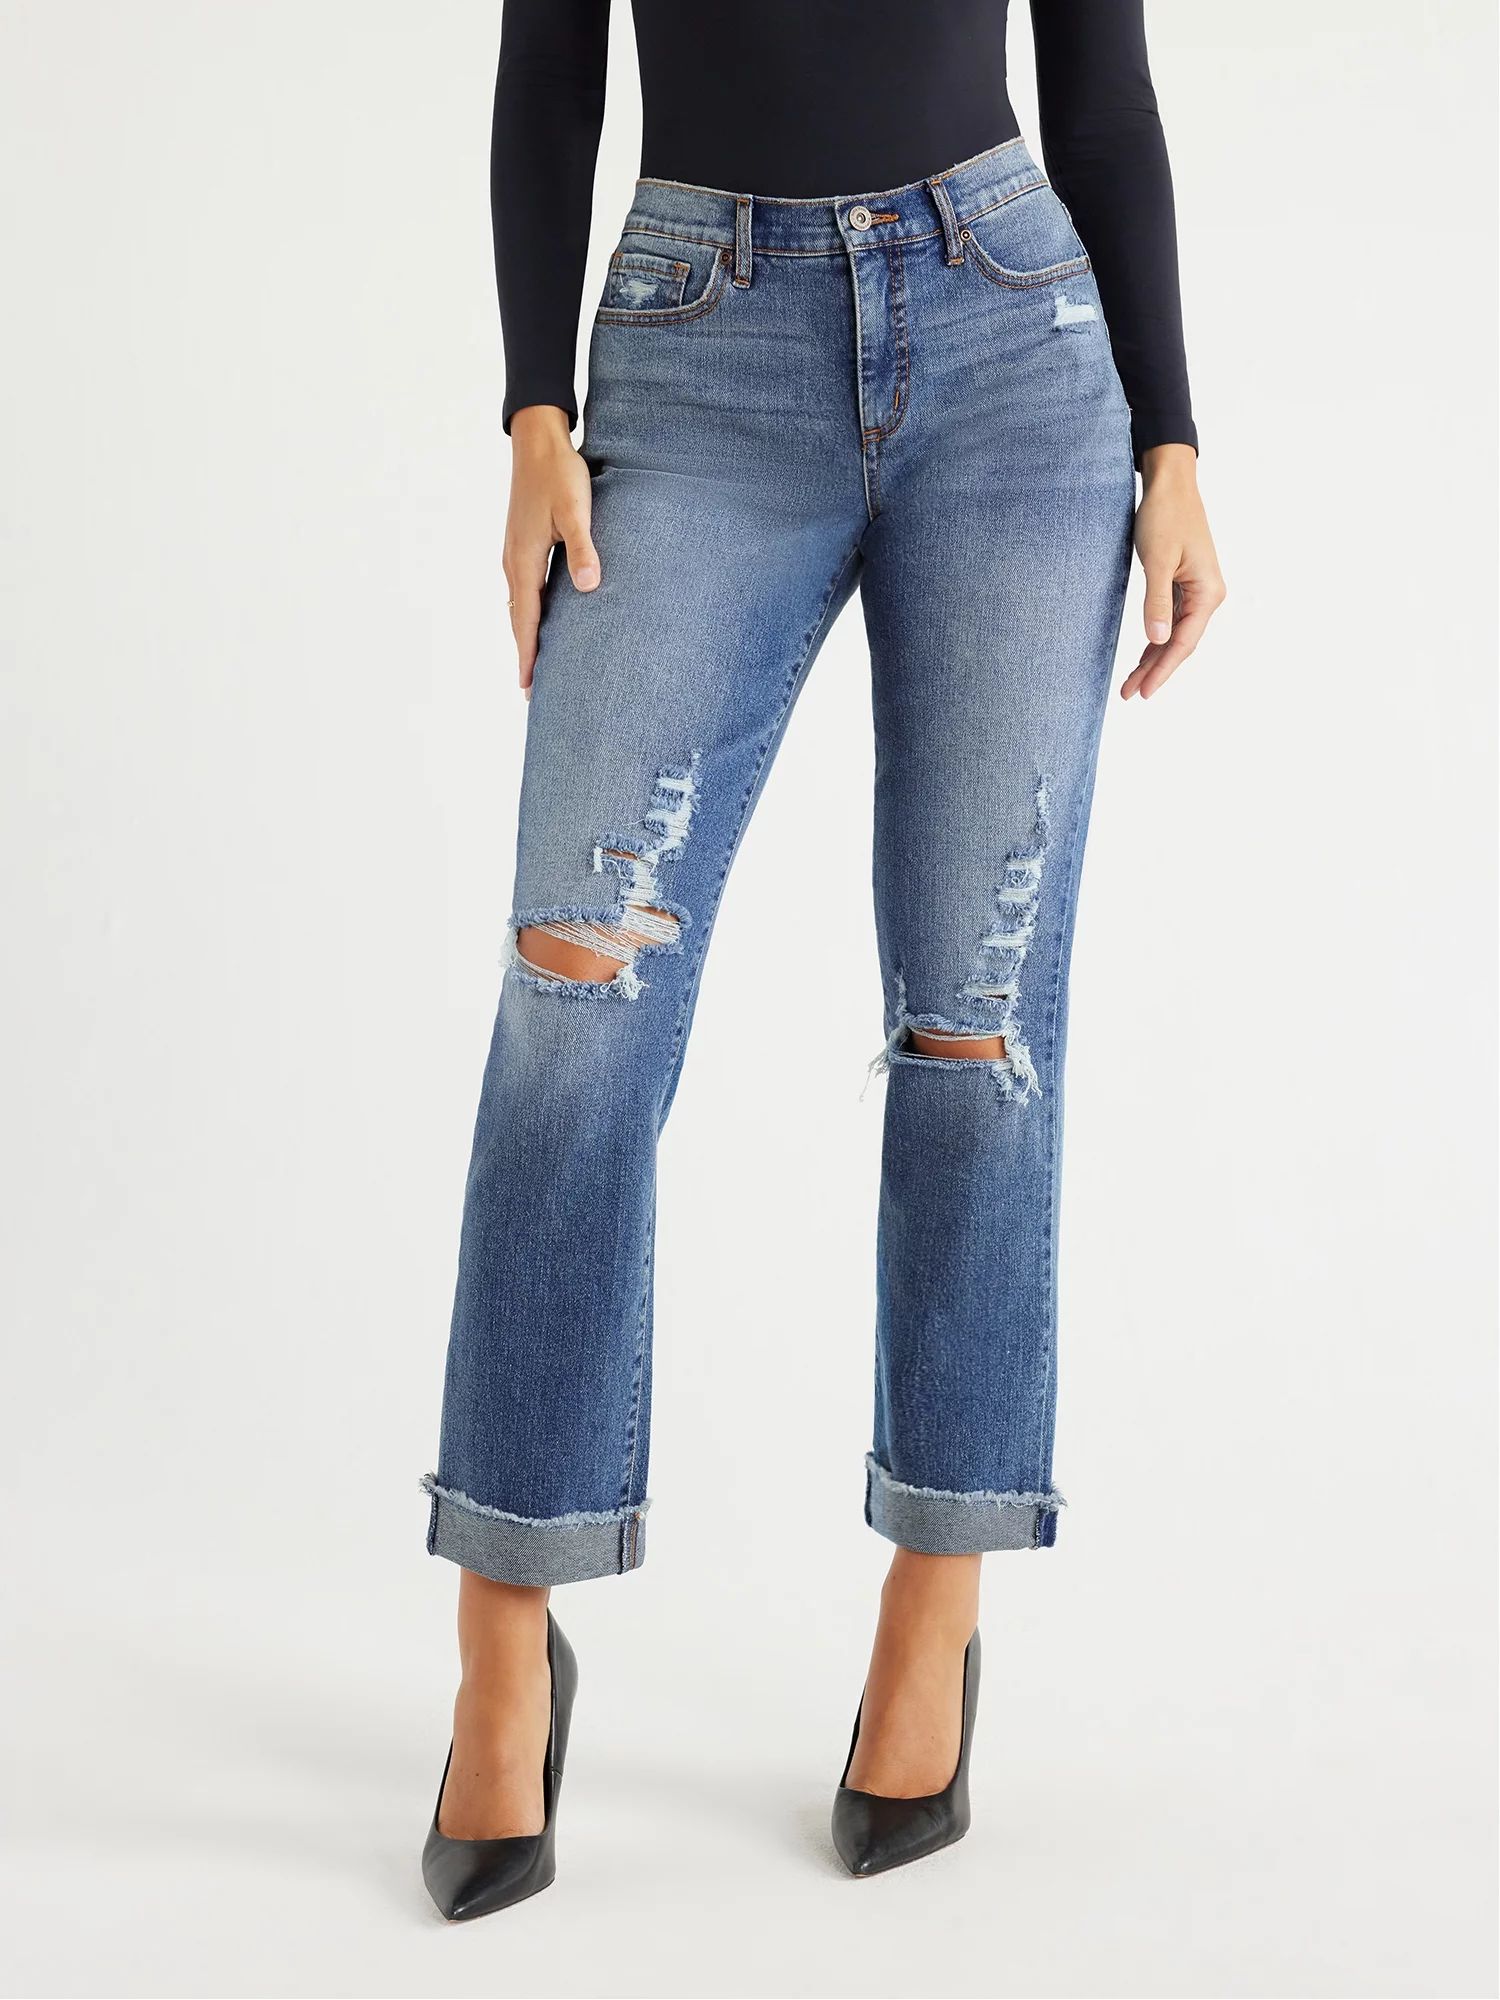 Sofia Jeans Women's Beatrix Slouchy Boyfriend Mid Rise Distressed Jeans, 27" Inseam, Sizes 0-18 | Walmart (US)